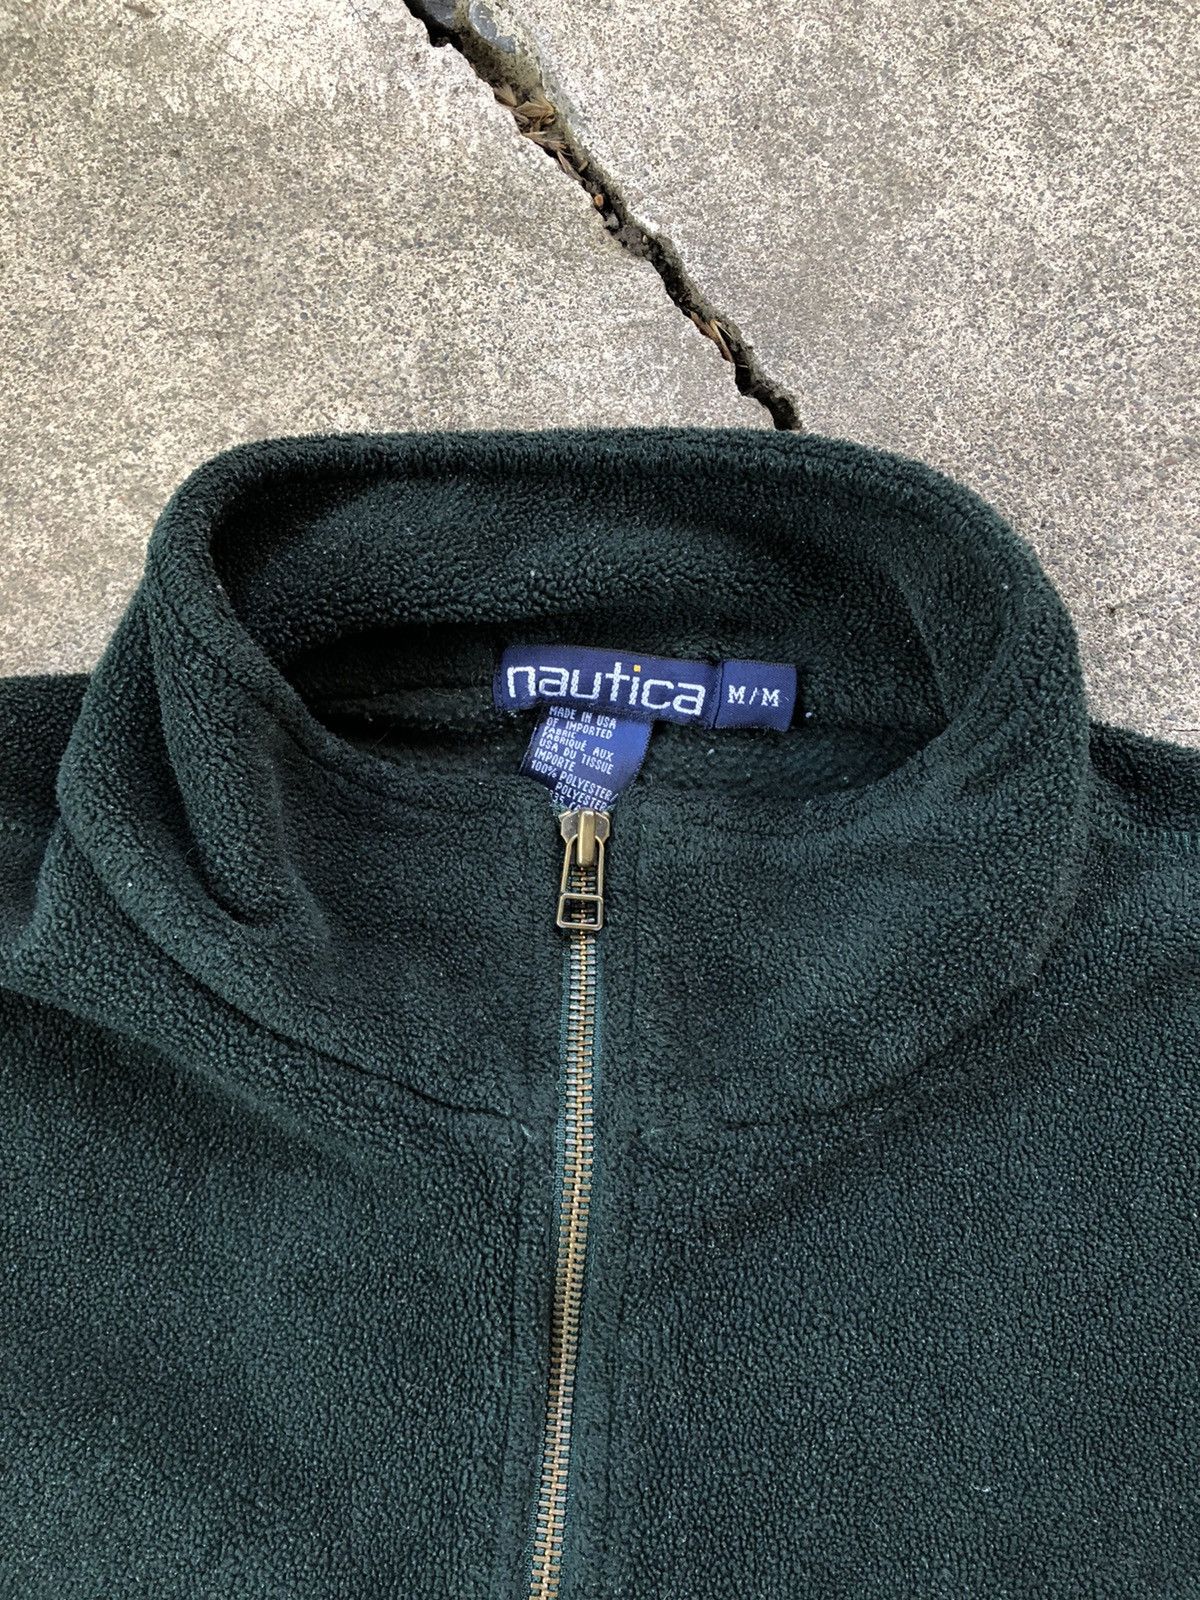 Vintage Nautica Fleece Pullover Sweatshirt Size US M / EU 48-50 / 2 - 2 Preview